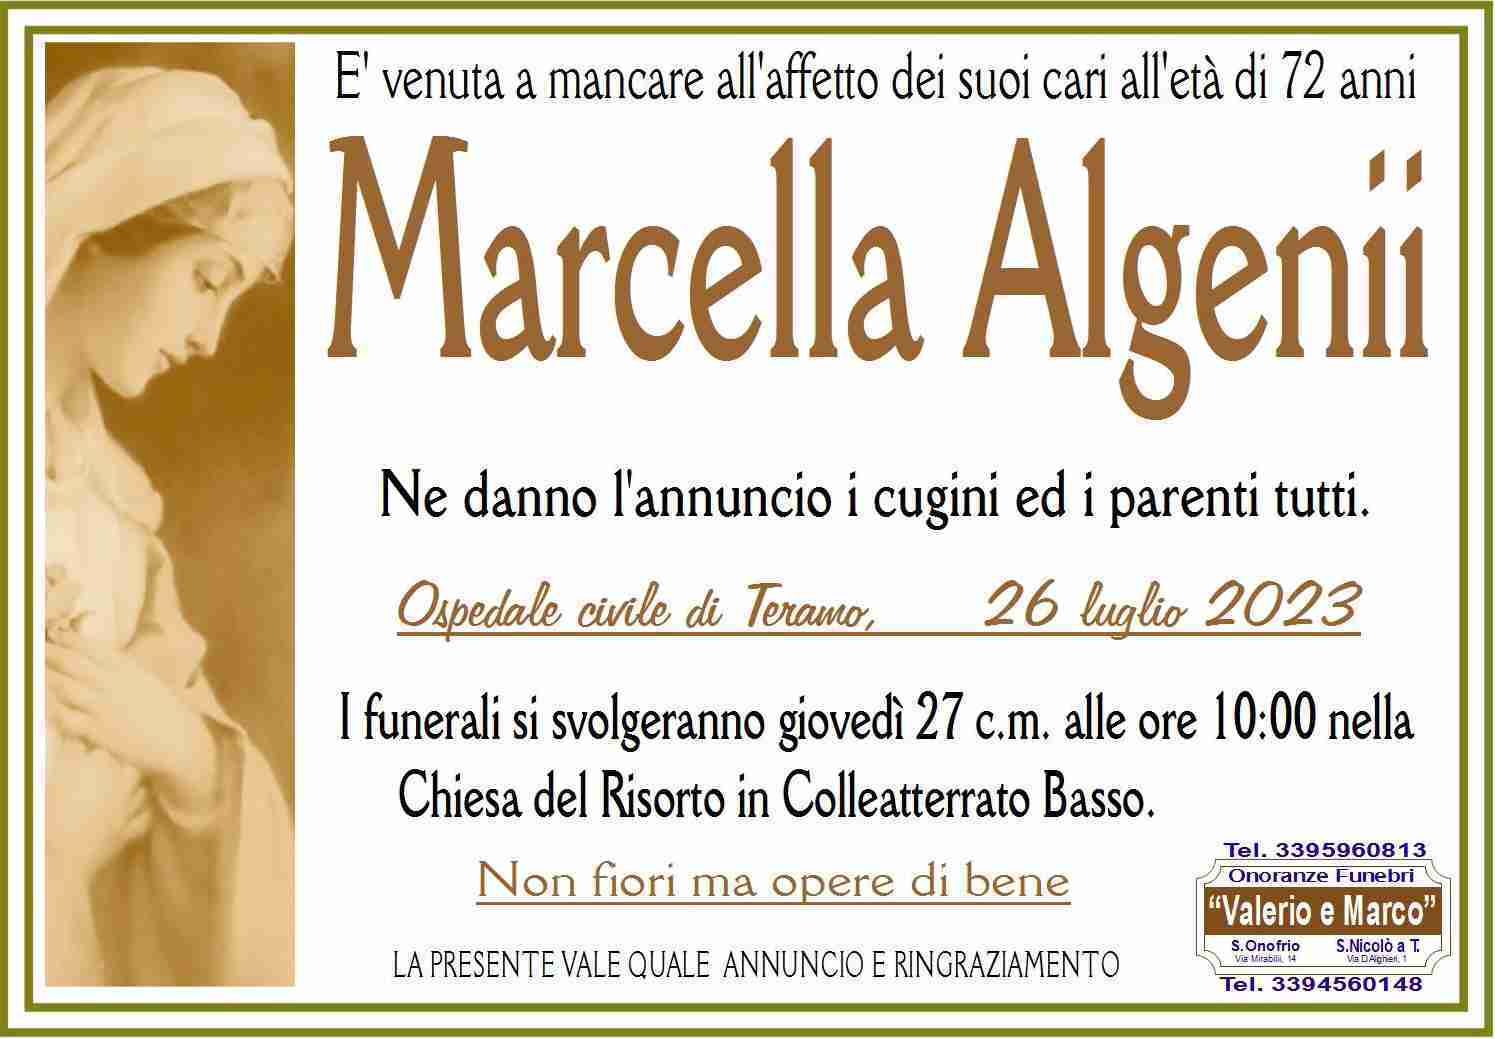 Marcella Algenii